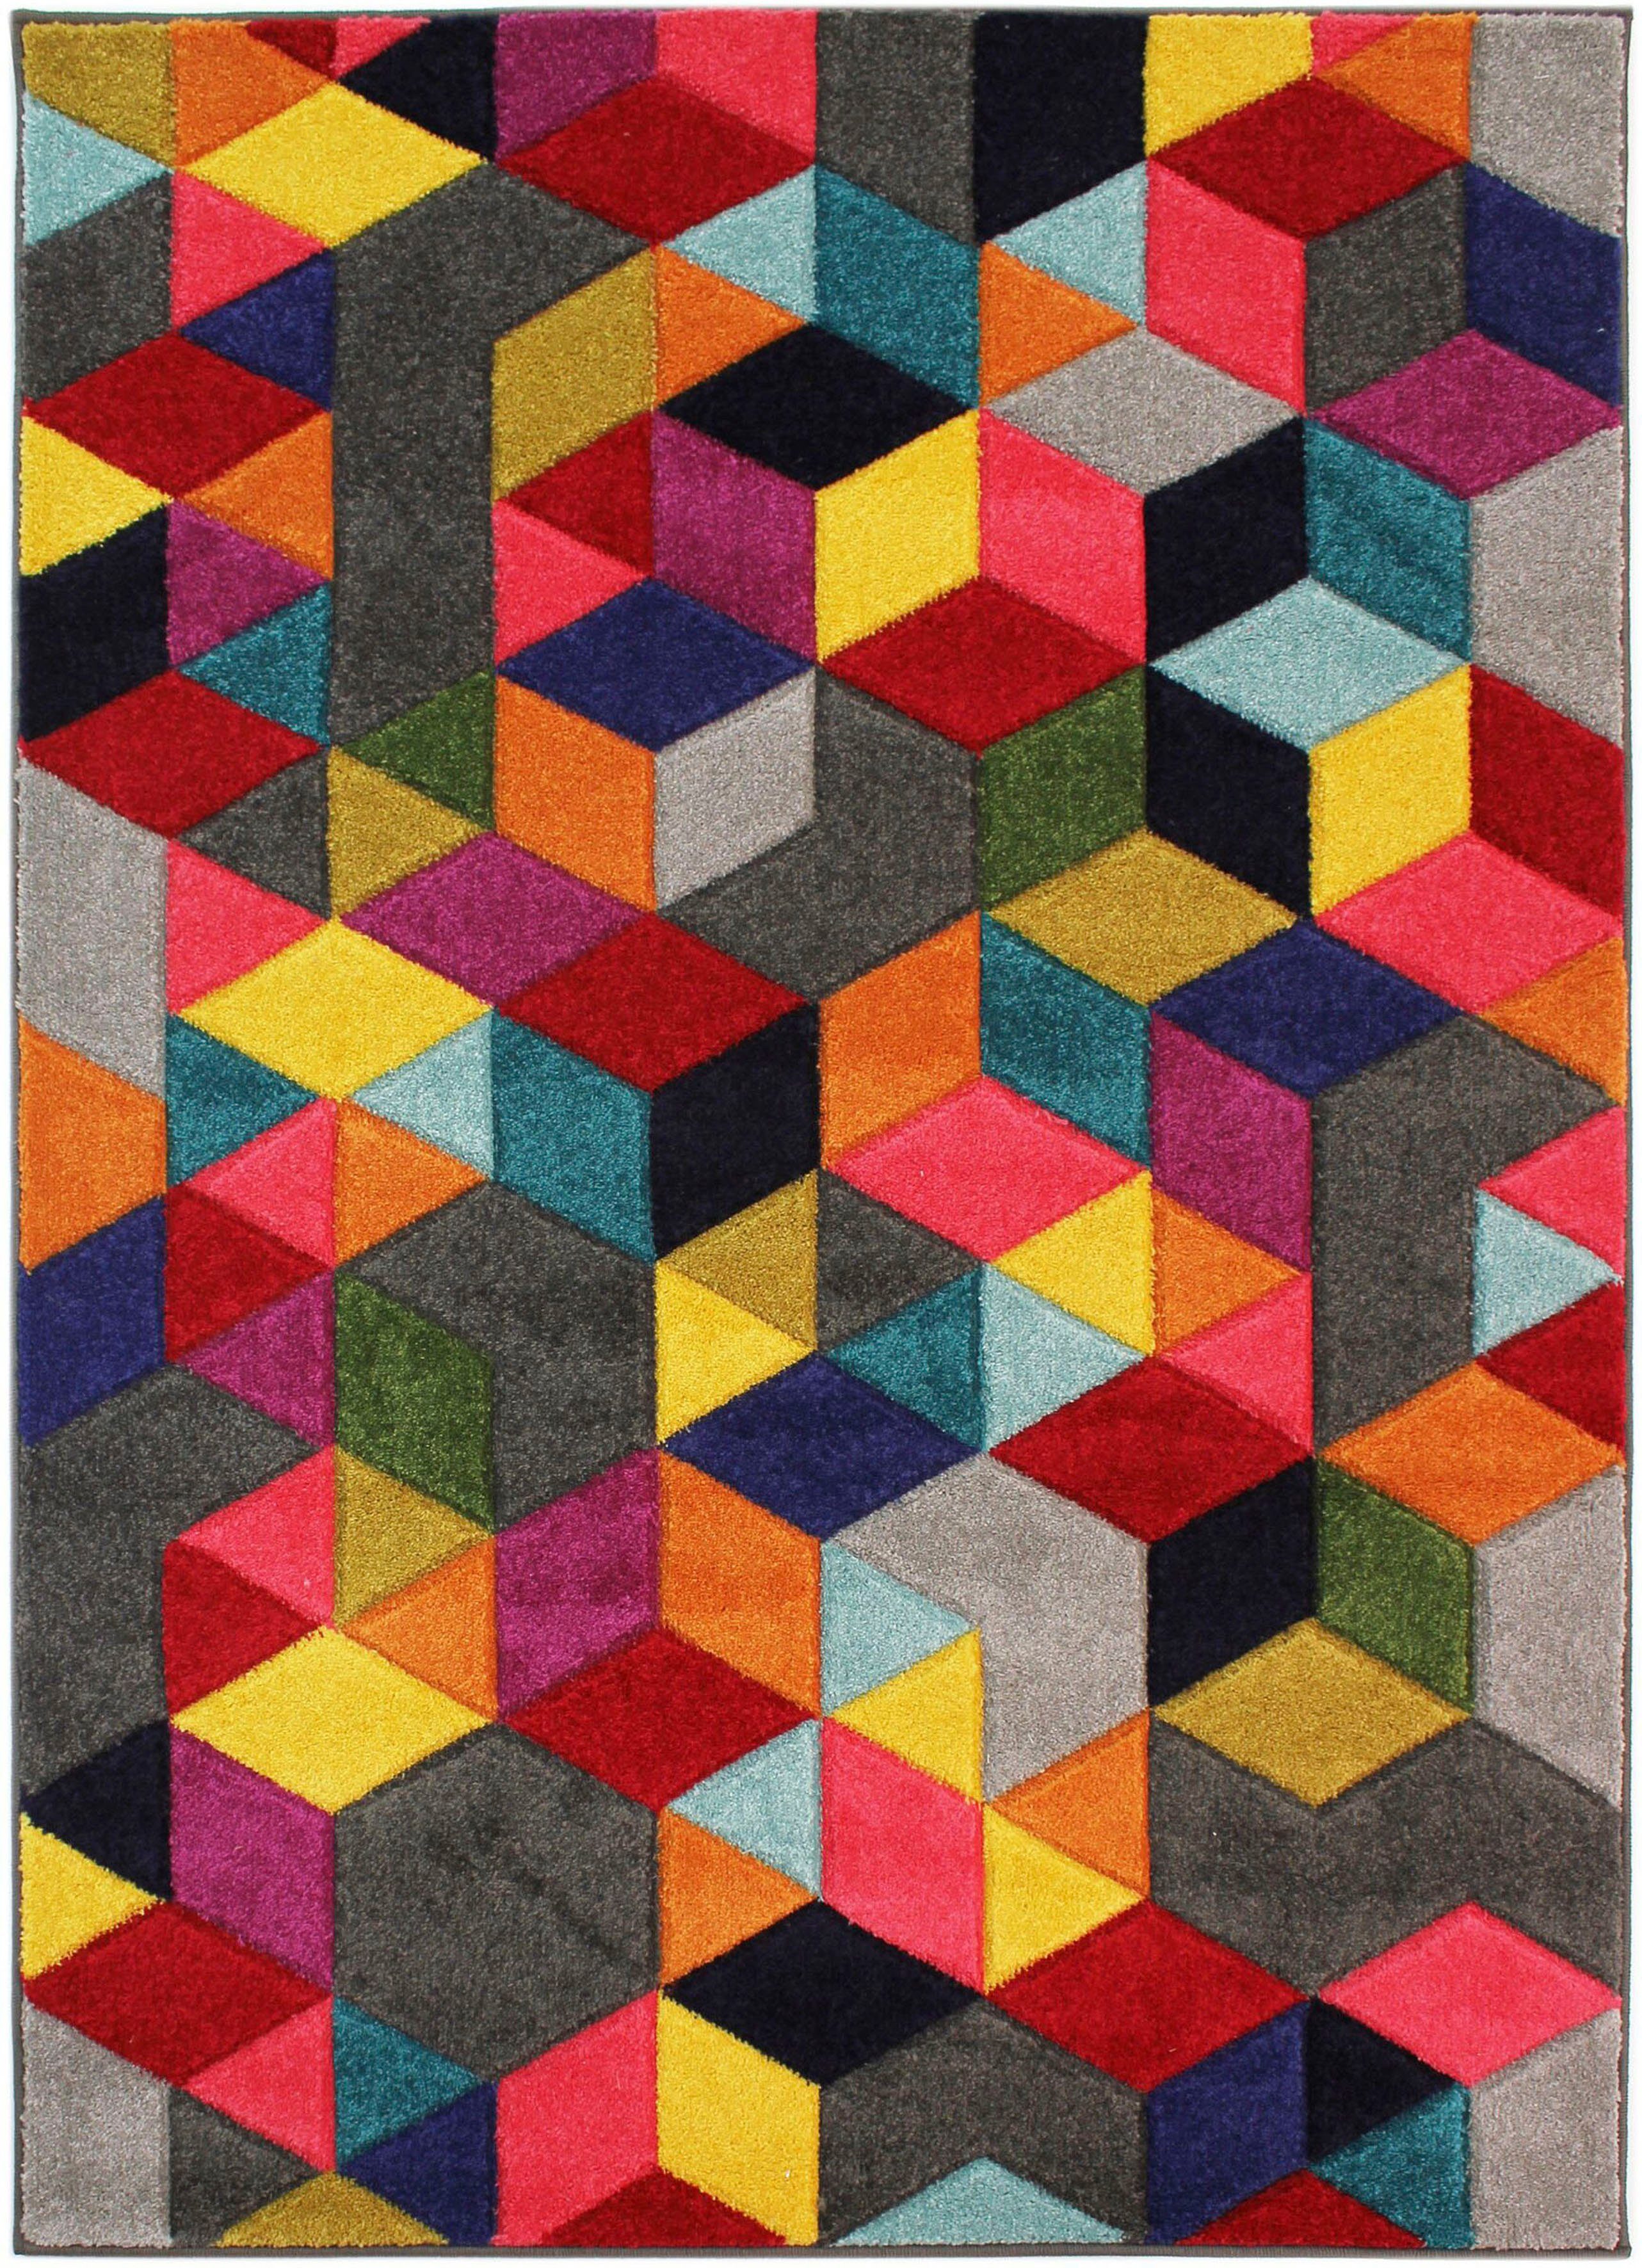 Teppich Muster, RUGS, mm, Cube geometrisches Dynamic, Höhe: fußbodenheizungsgeeignet, rechteckig, Design, FLAIR 10 bunt